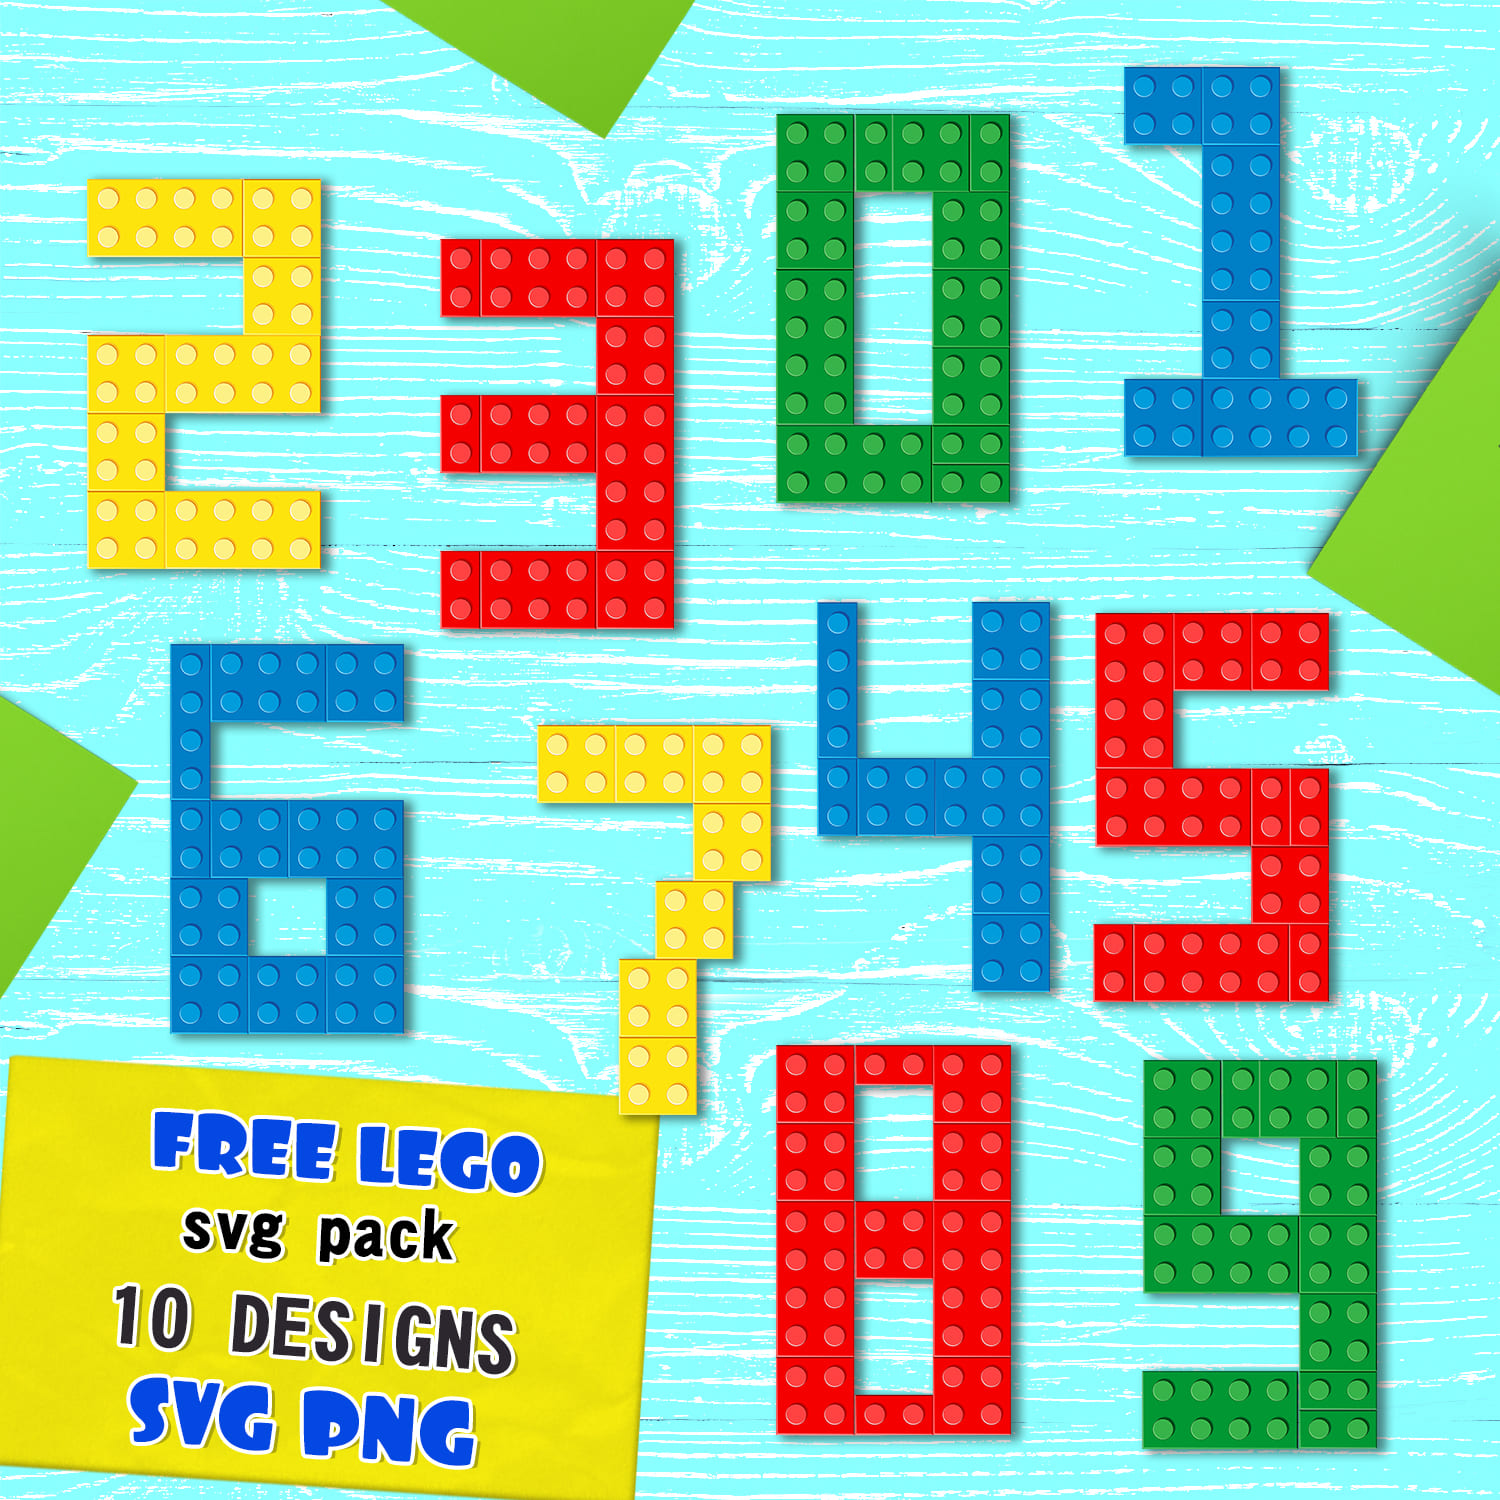 Lego Logo PNG Transparent & SVG Vector - Freebie Supply